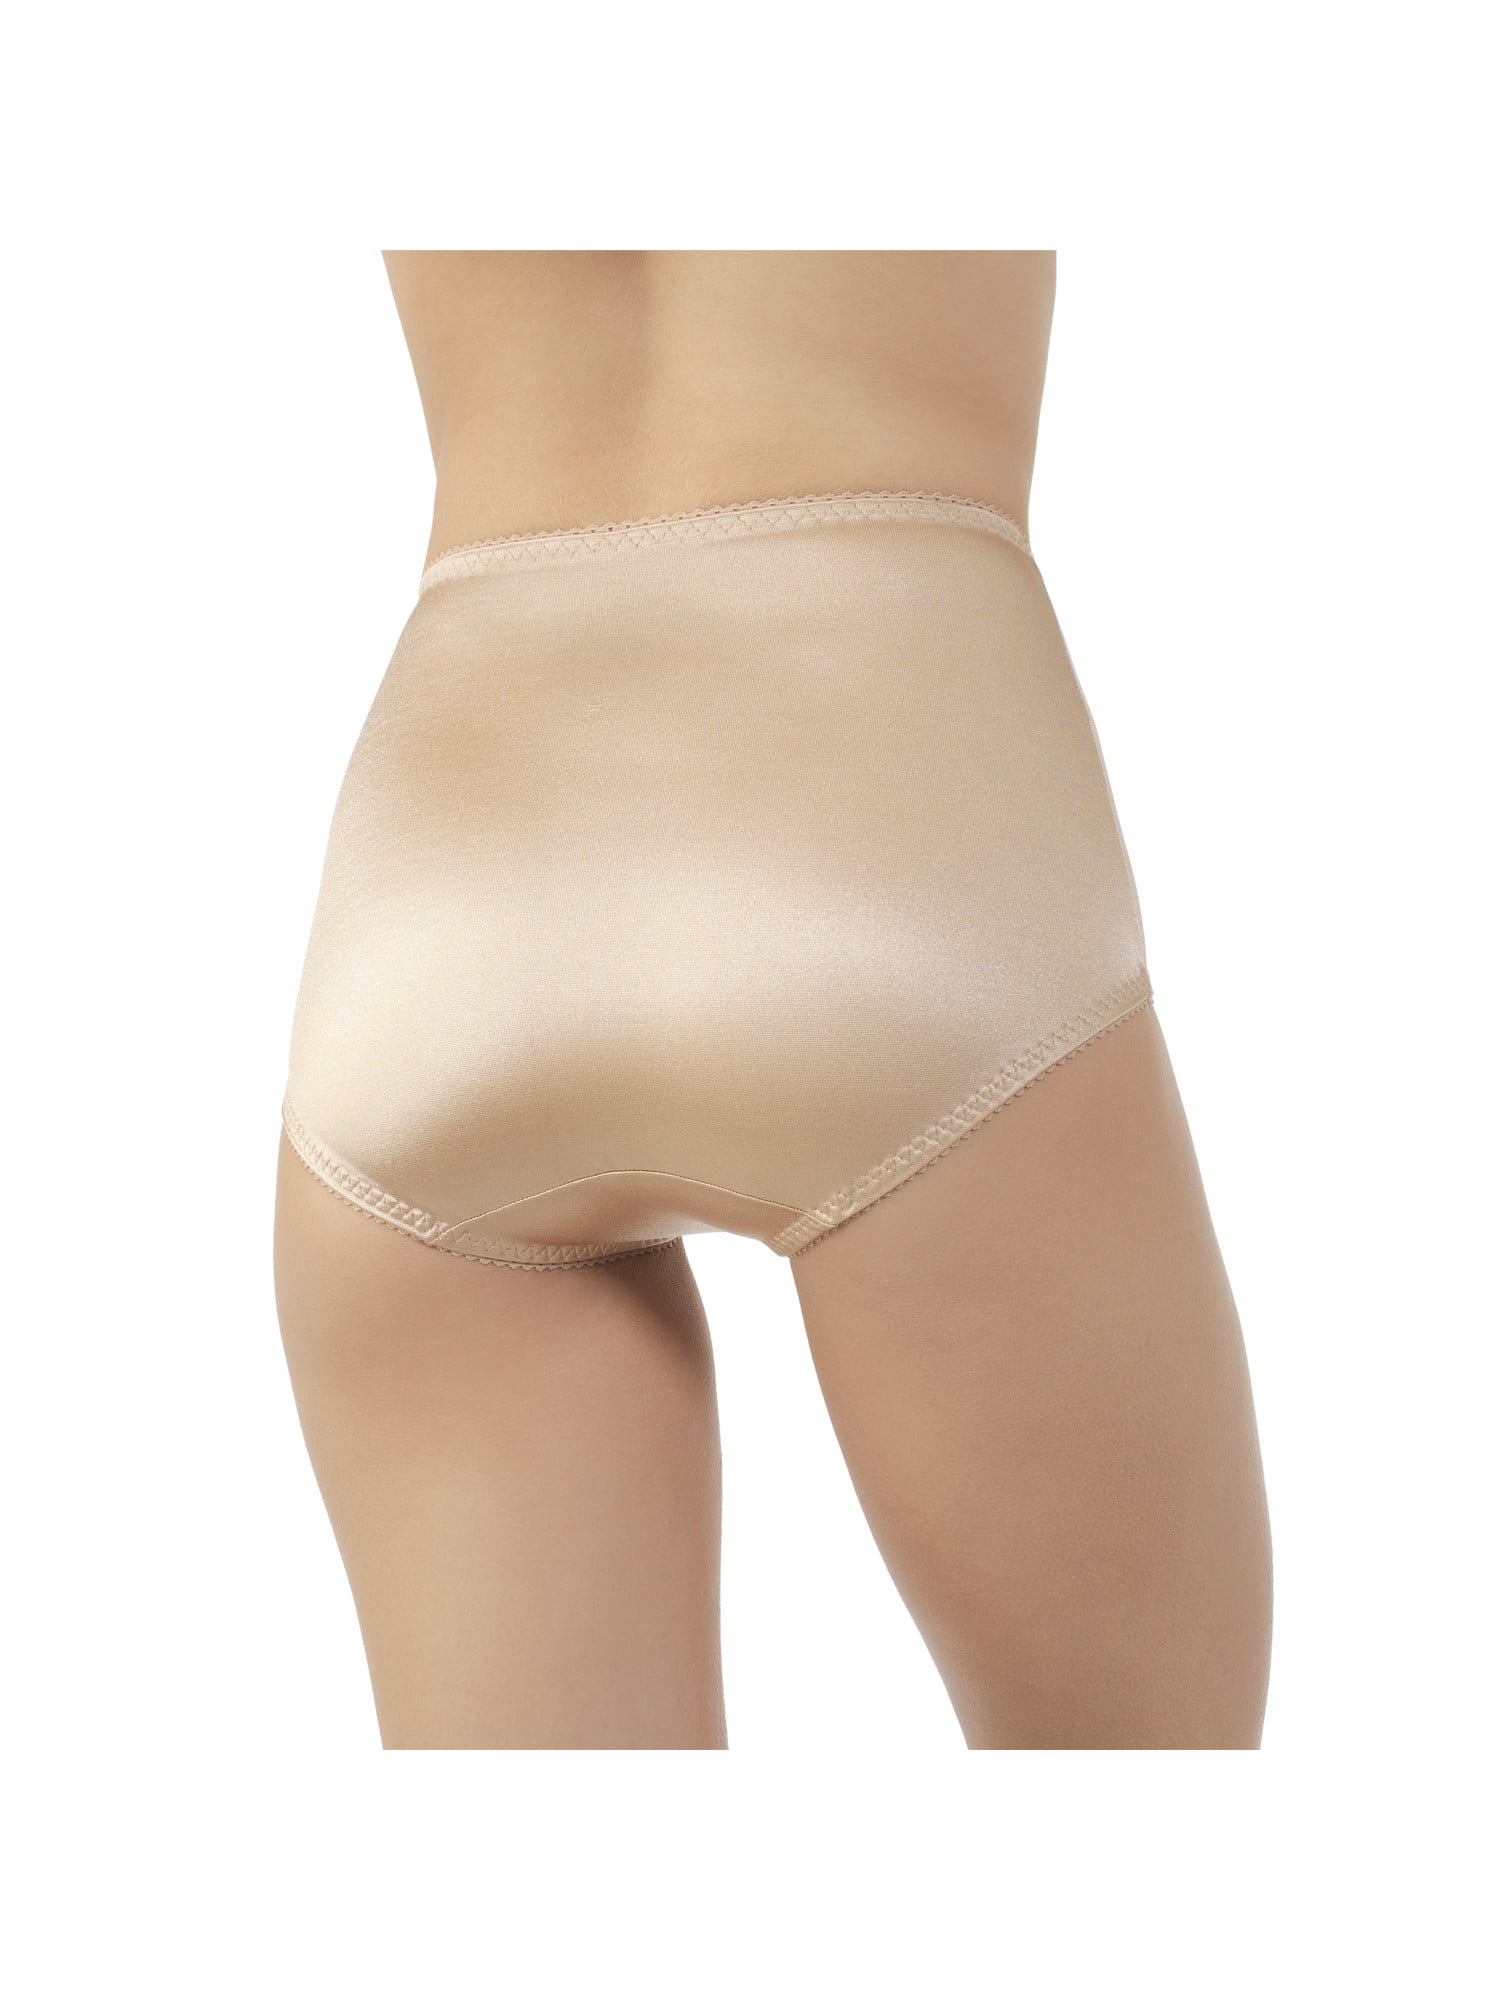 Women's Vassarette 40001 Undershapers Smoothing & Shaping Brief Panty (Vass  Latte 3X) 